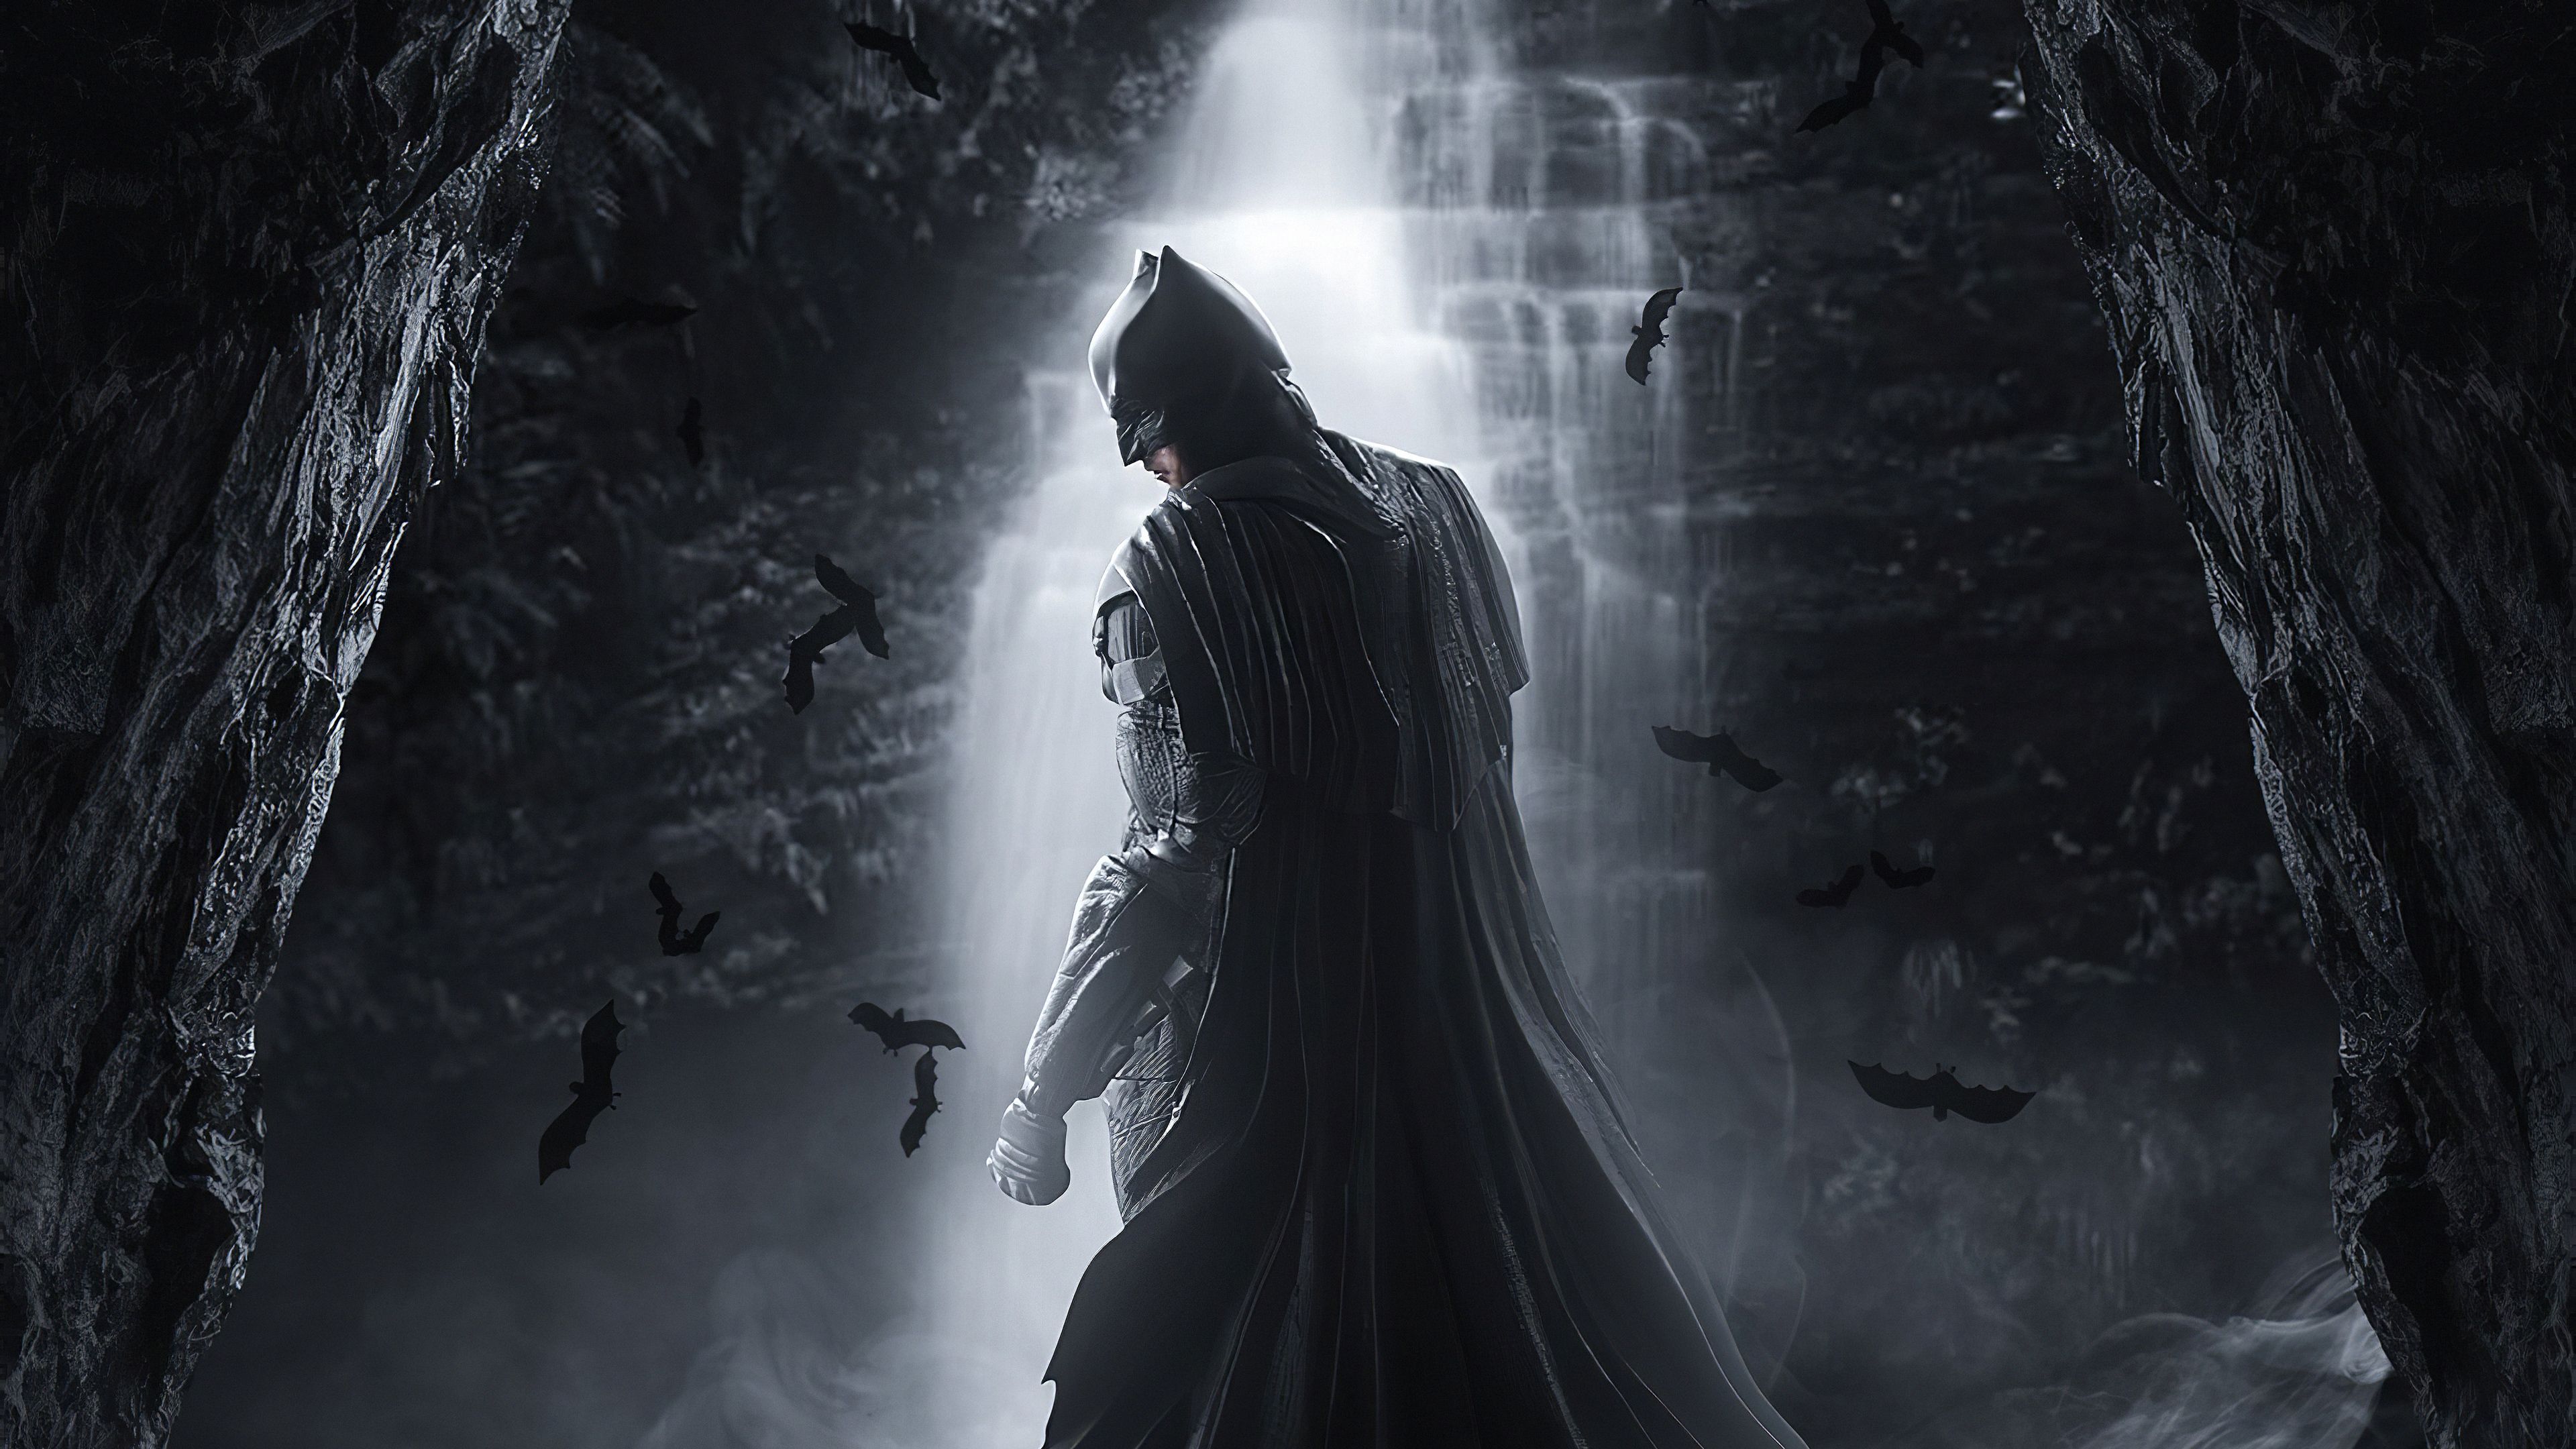 Batman 4k Darkknight, HD Superheroes, 4k Wallpaper, Image